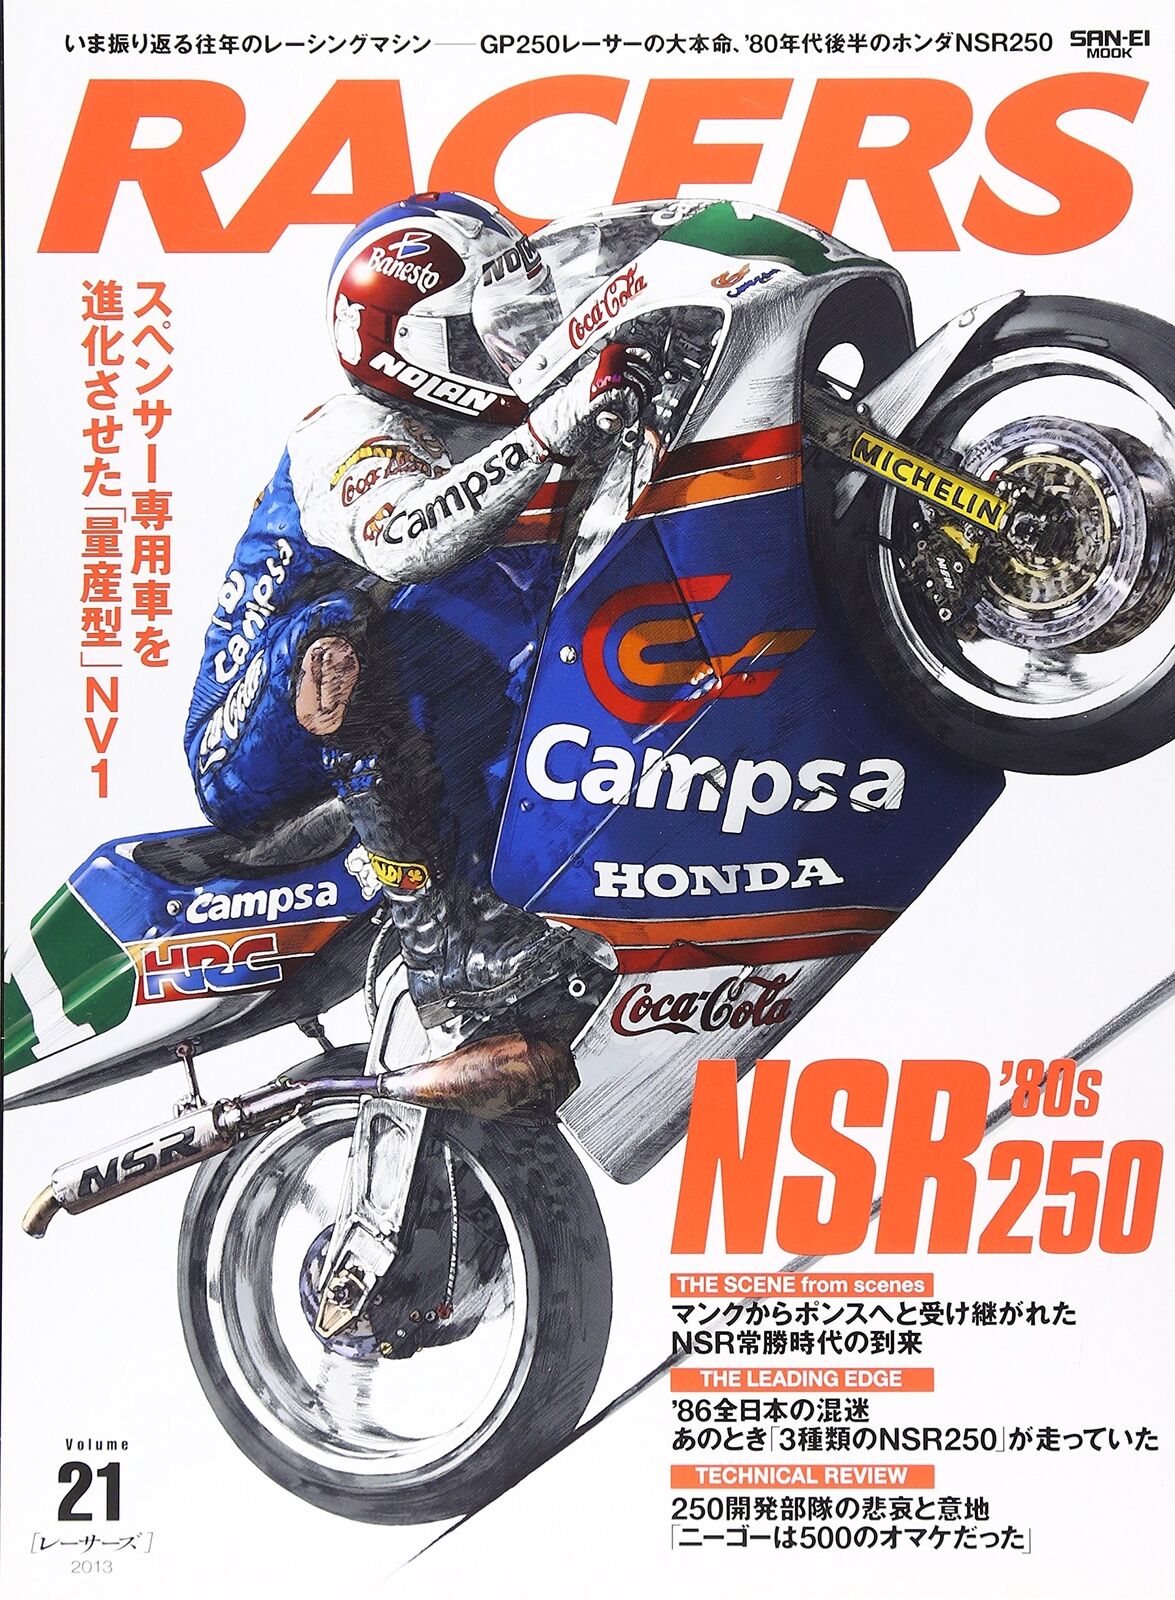 Racers Vol.21 Motorcycle Magazine GP250 HONDA NSR25 \'80 NV1 Book New